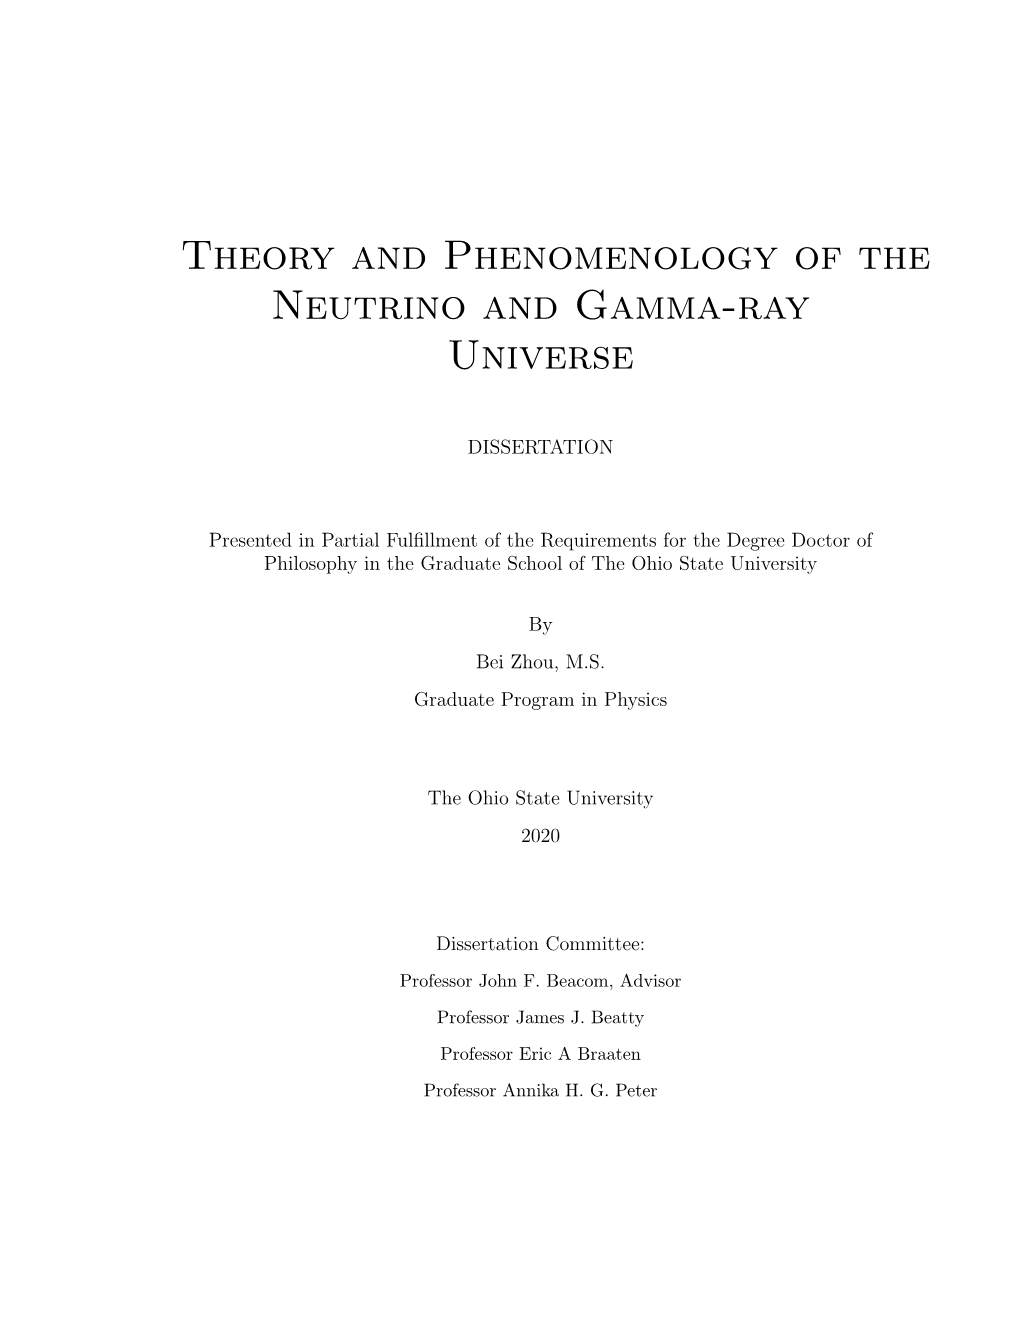 Theory and Phenomenology of the Neutrino and Gamma-Ray Universe